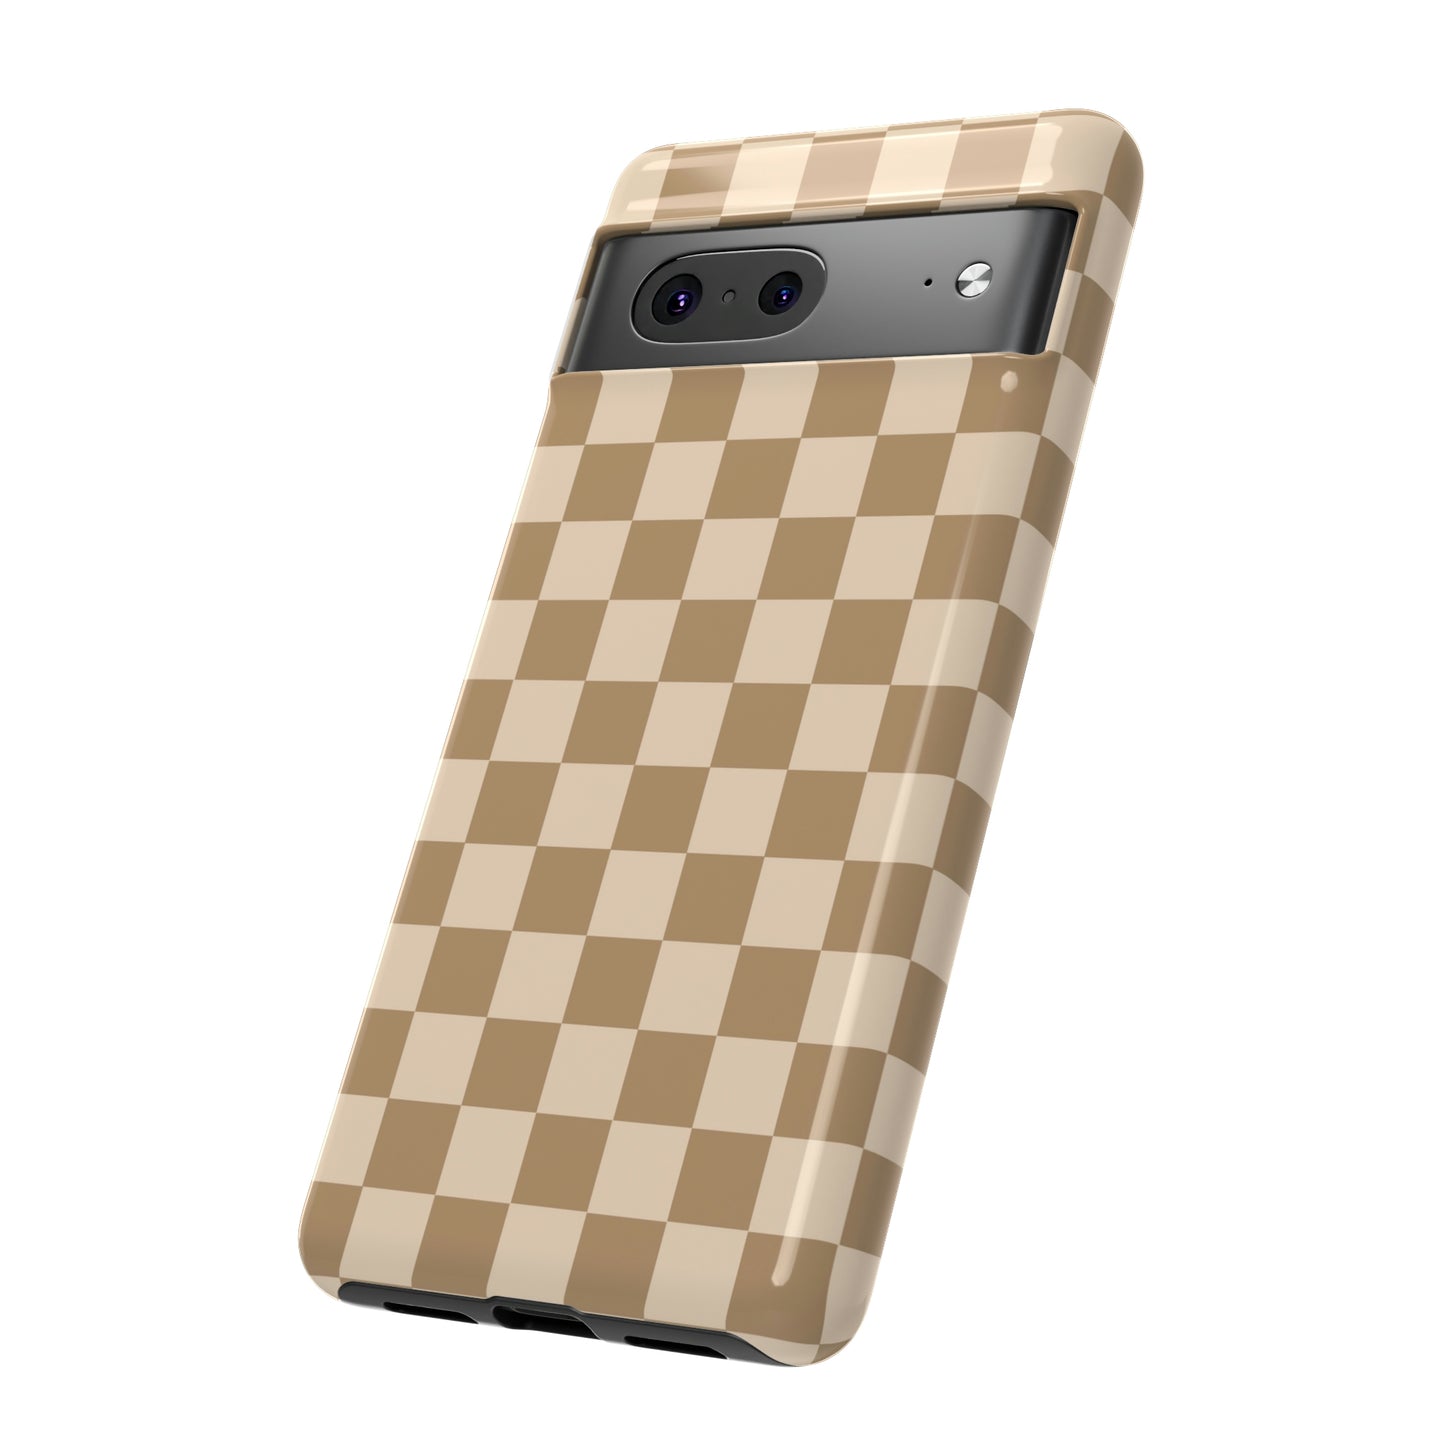 Brown Checkerboard